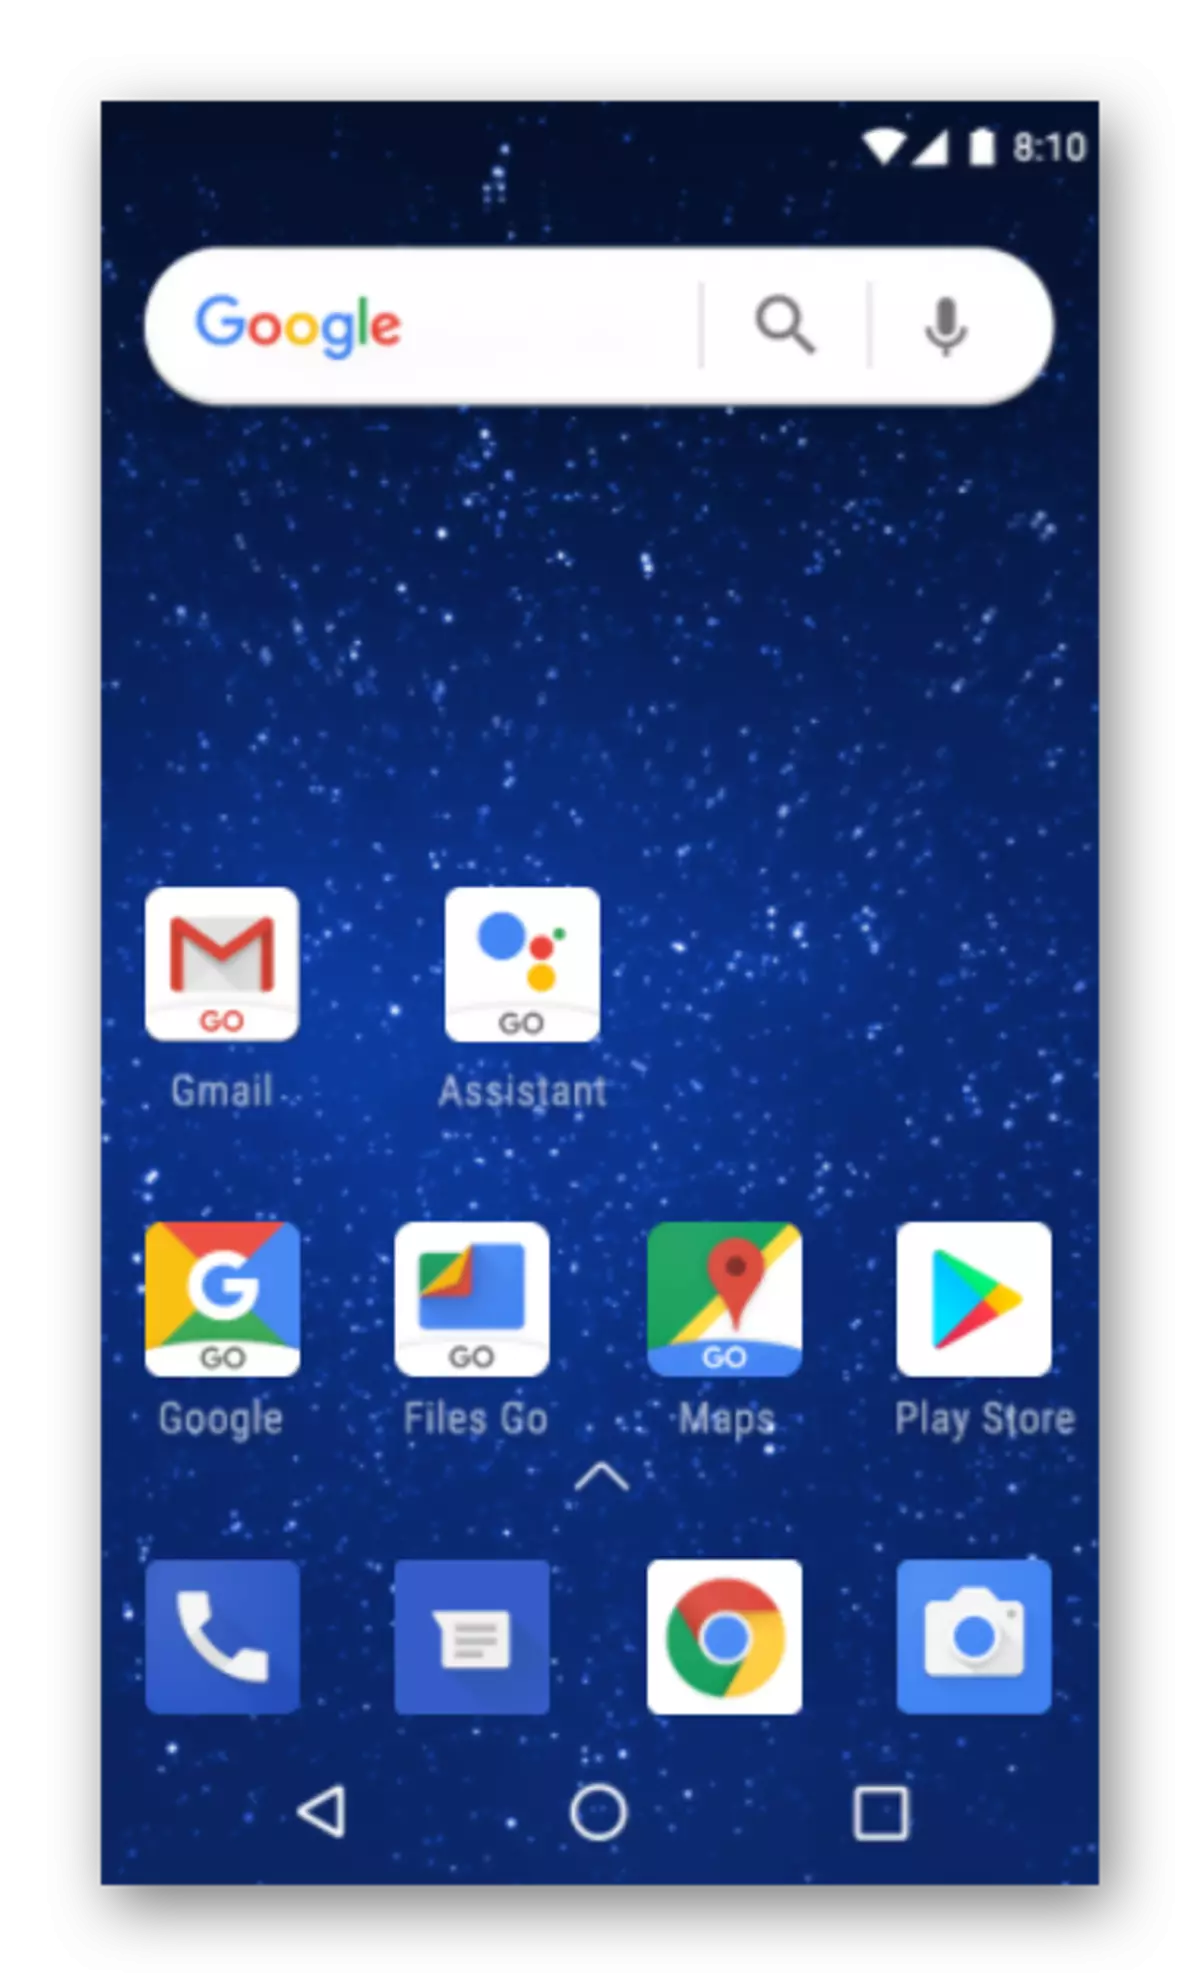 Google- ൽ നിന്നുള്ള ഡെസ്ക്ടോപ്പ് പുതിയ OS - Android പോയി